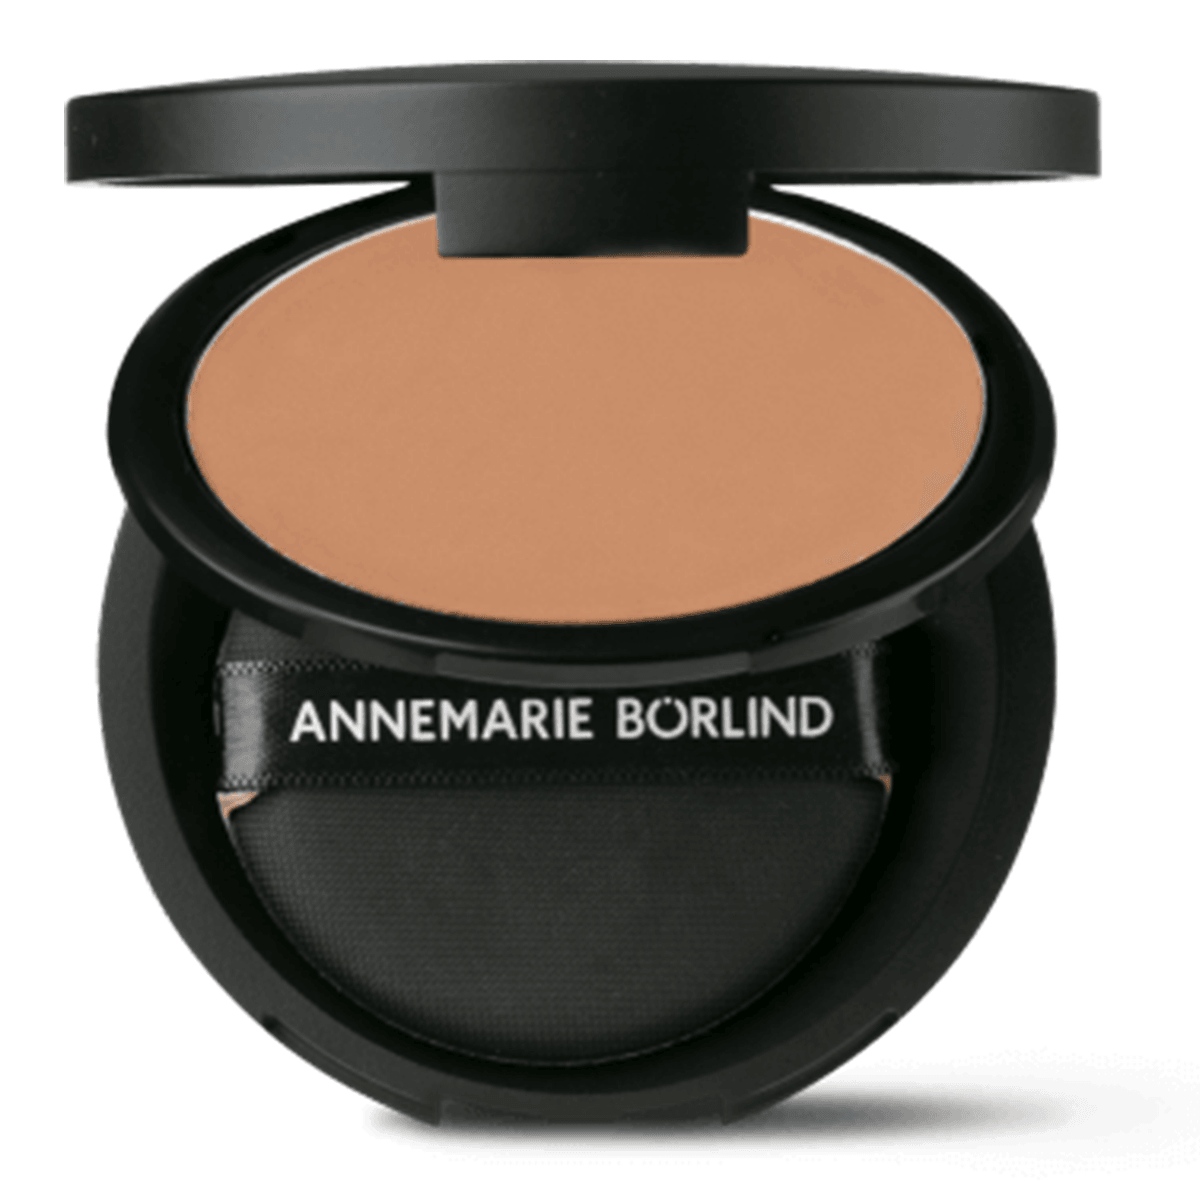 Annemarie Borlind Compact Make-Up Almond 10g Cosmetics - Makeup at Village Vitamin Store